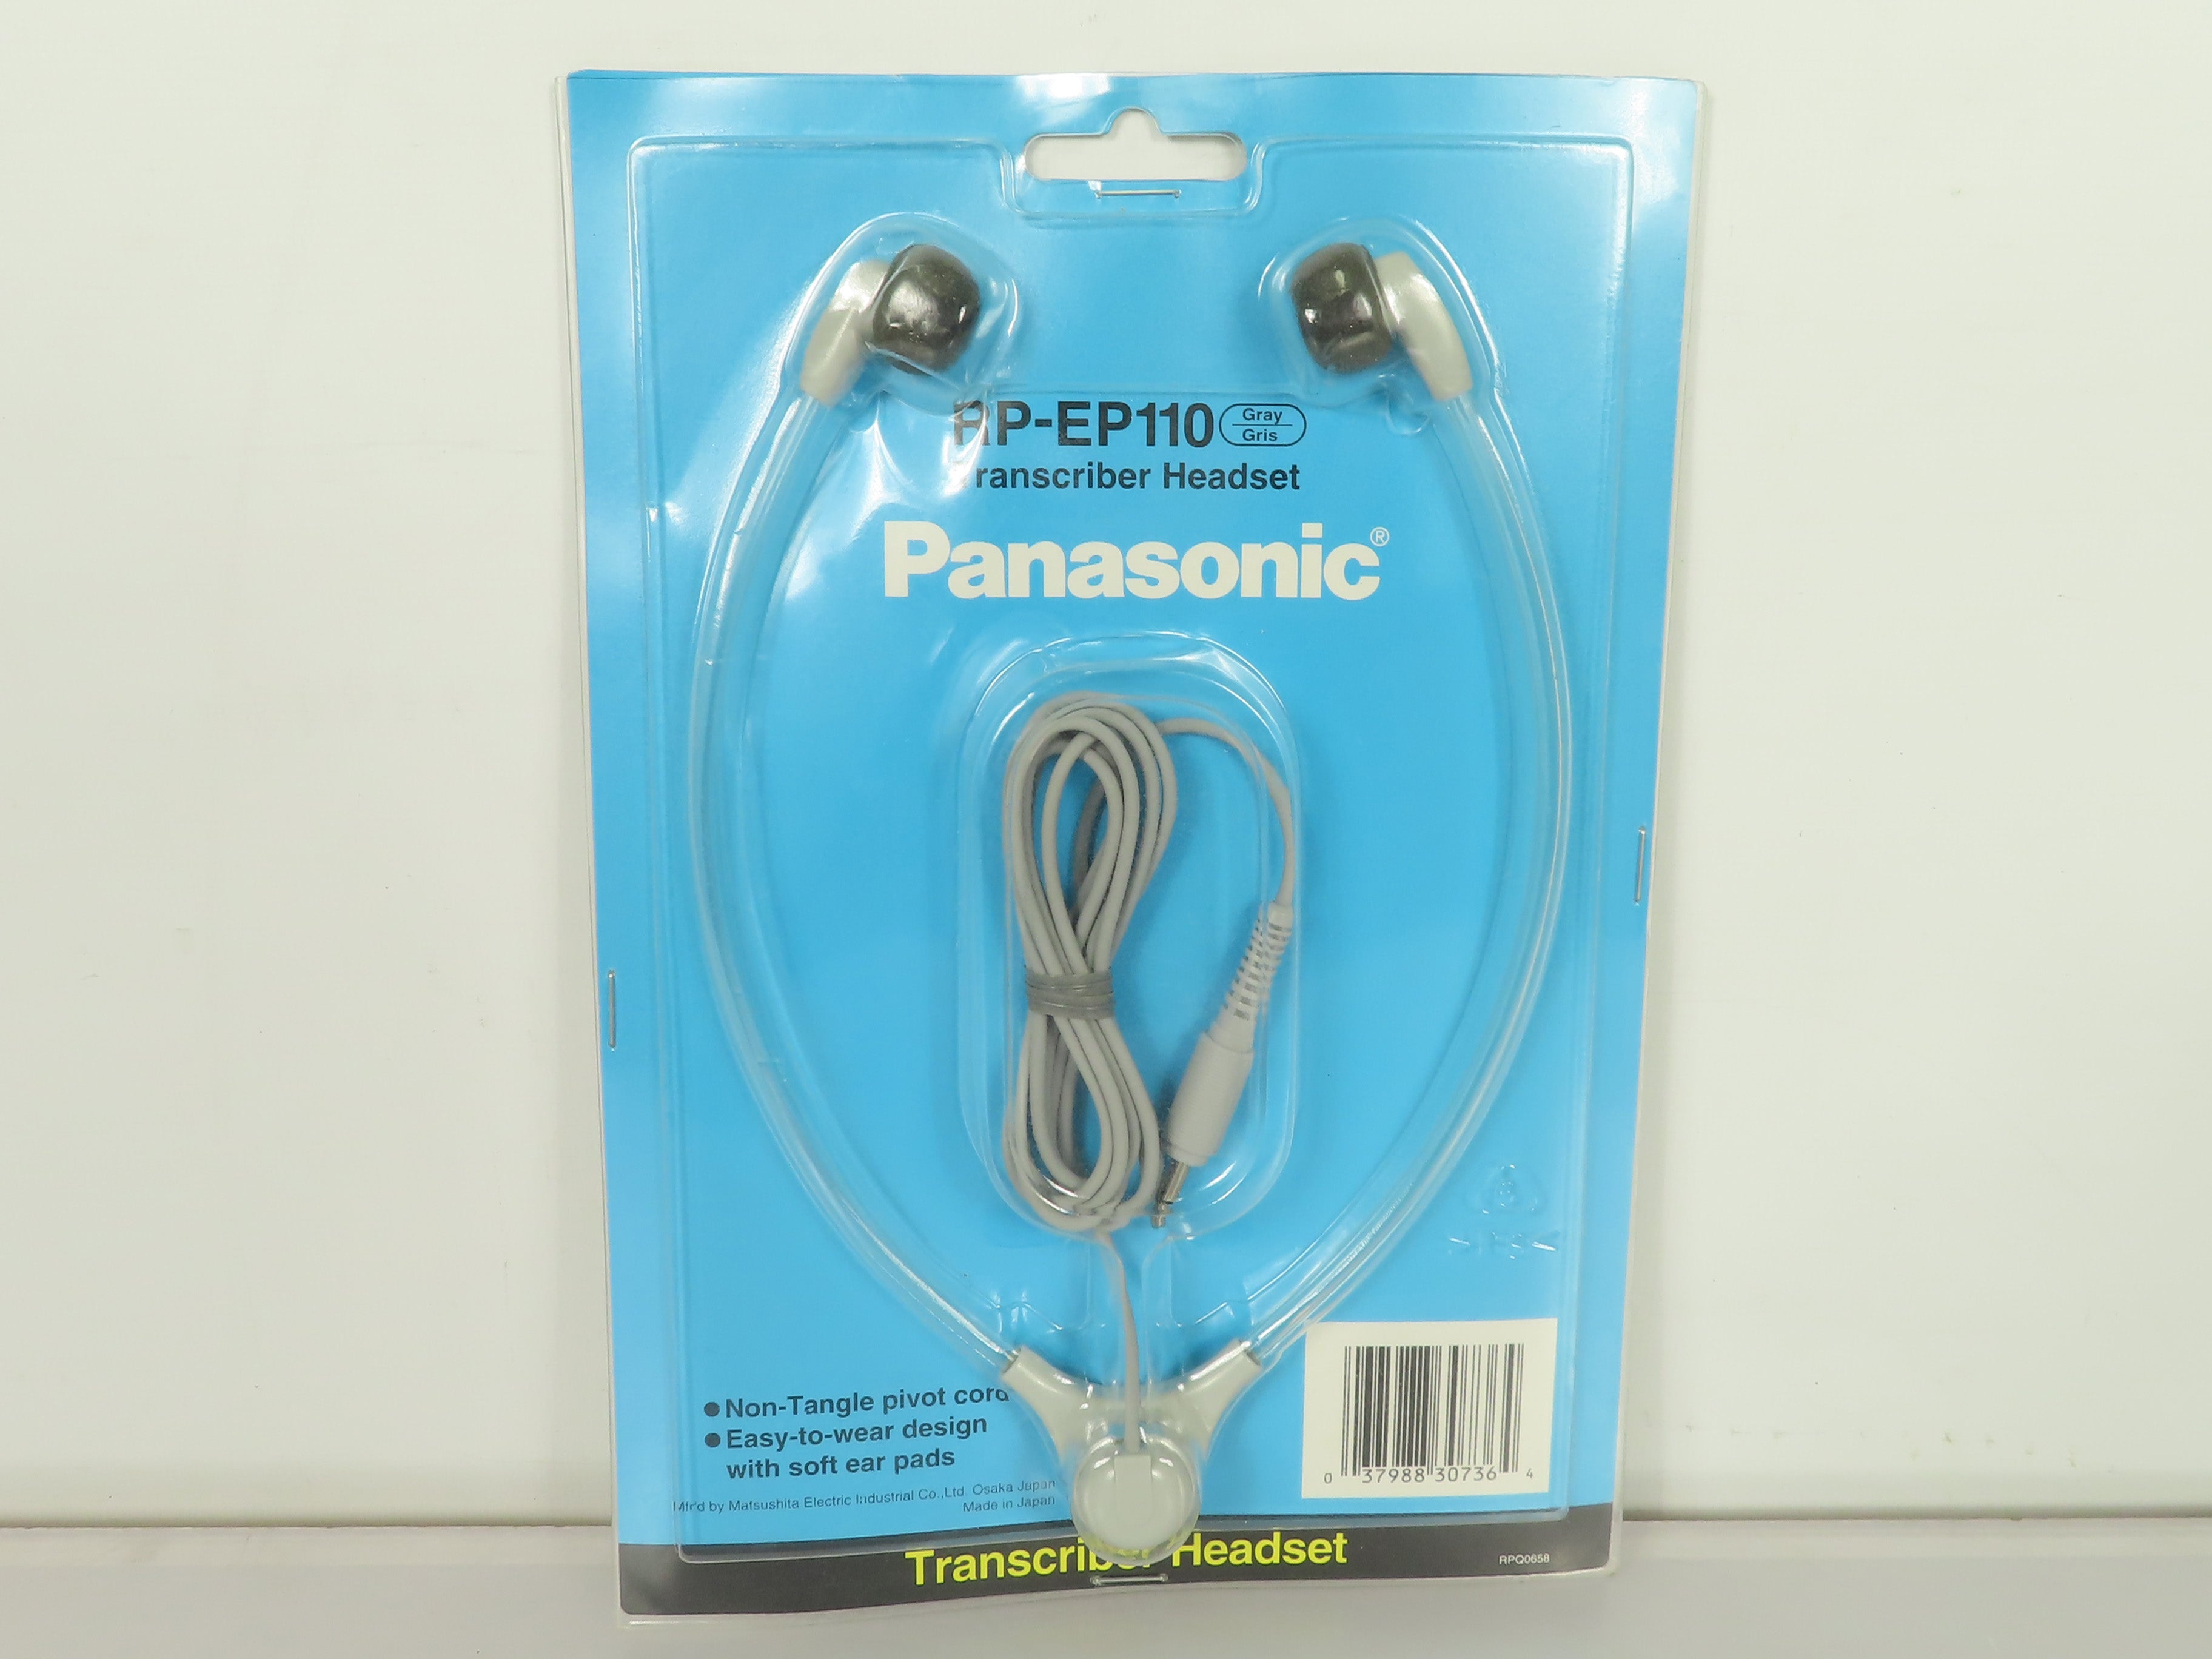 Panasonic RP-EP110 Transcriber Headset